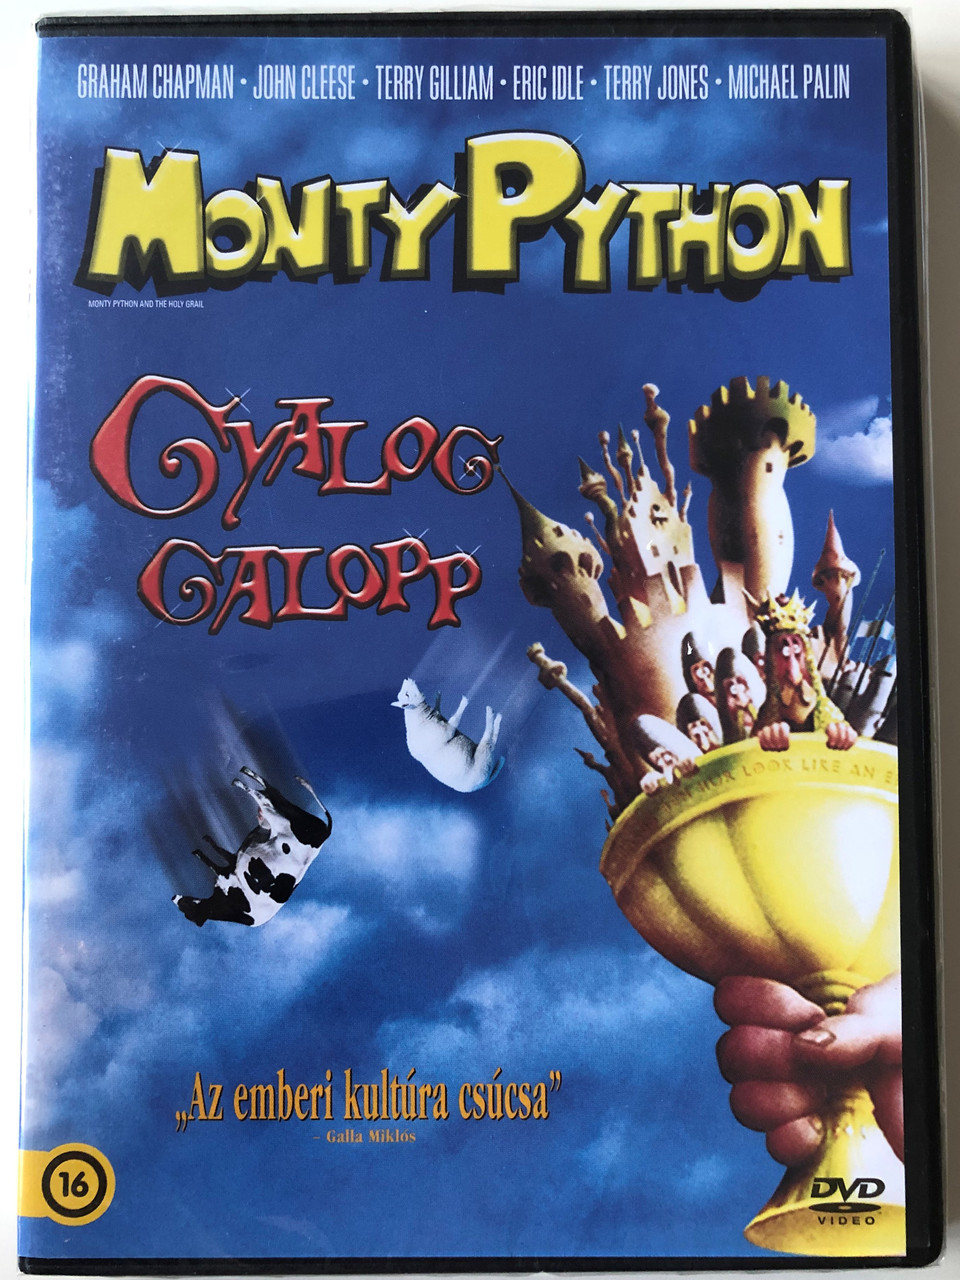 Monty Python & the Holy Grail DVD 1975 Monty Python Gyalog Galopp /  Directed by Terry Gilliam, Terry Jones / Starring: Graham Chapman, John  Cleese, Terry Gilliam, Eric Idle, Terry Jones, Michael Palin -  bibleinmylanguage